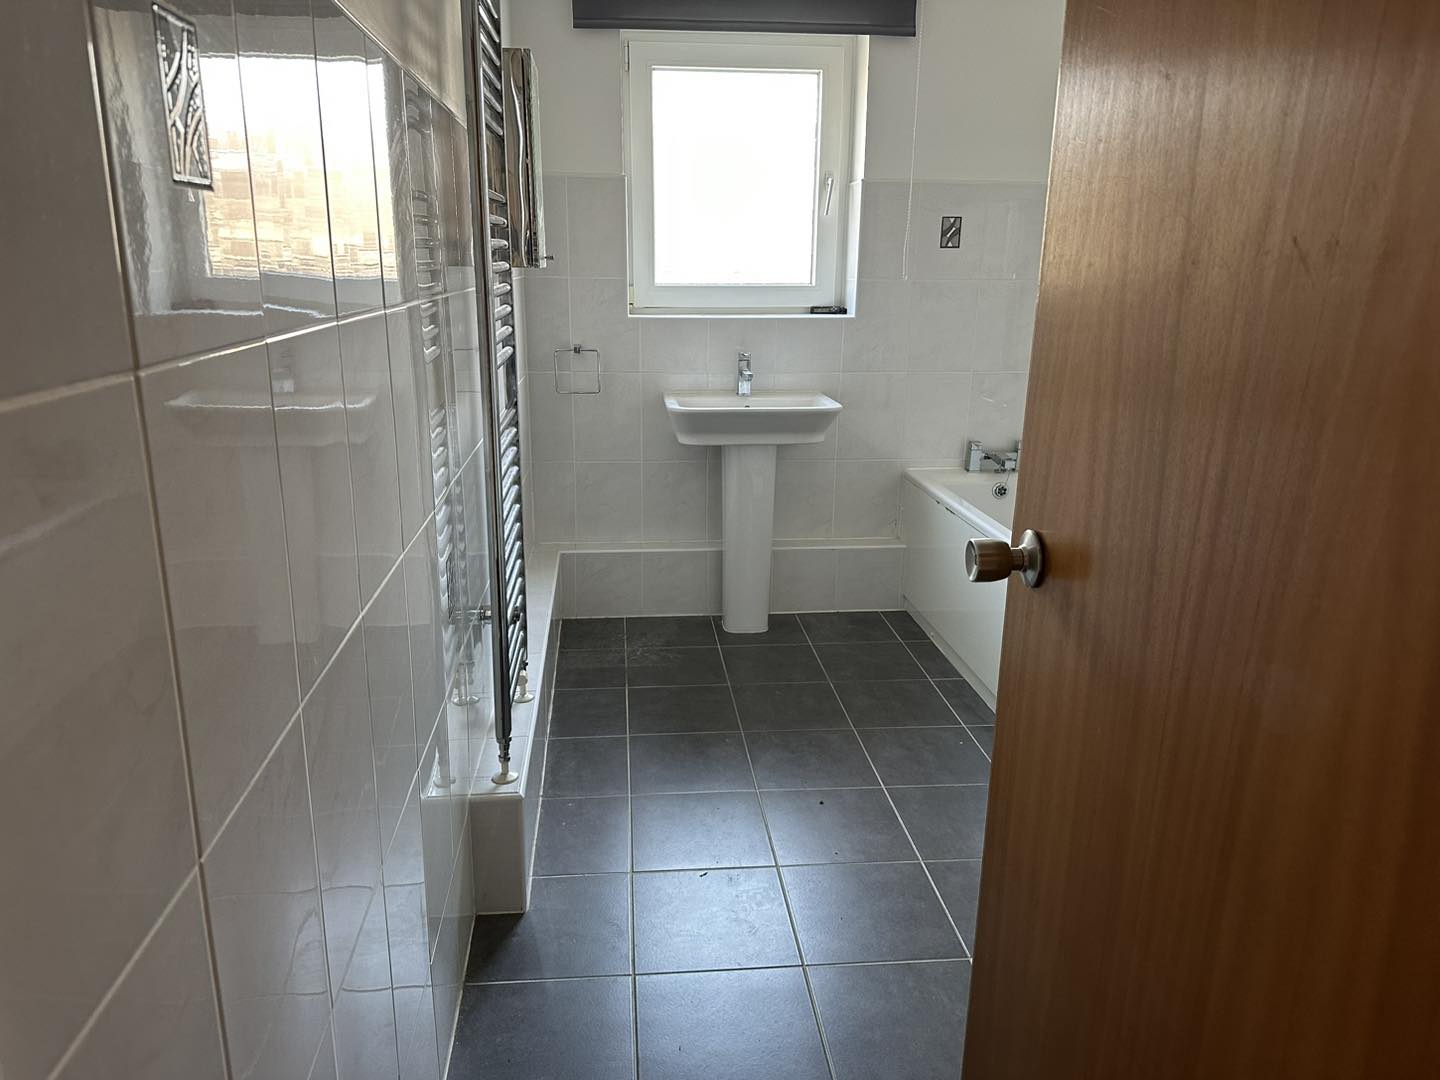 A photo of a clean bathroom in a house